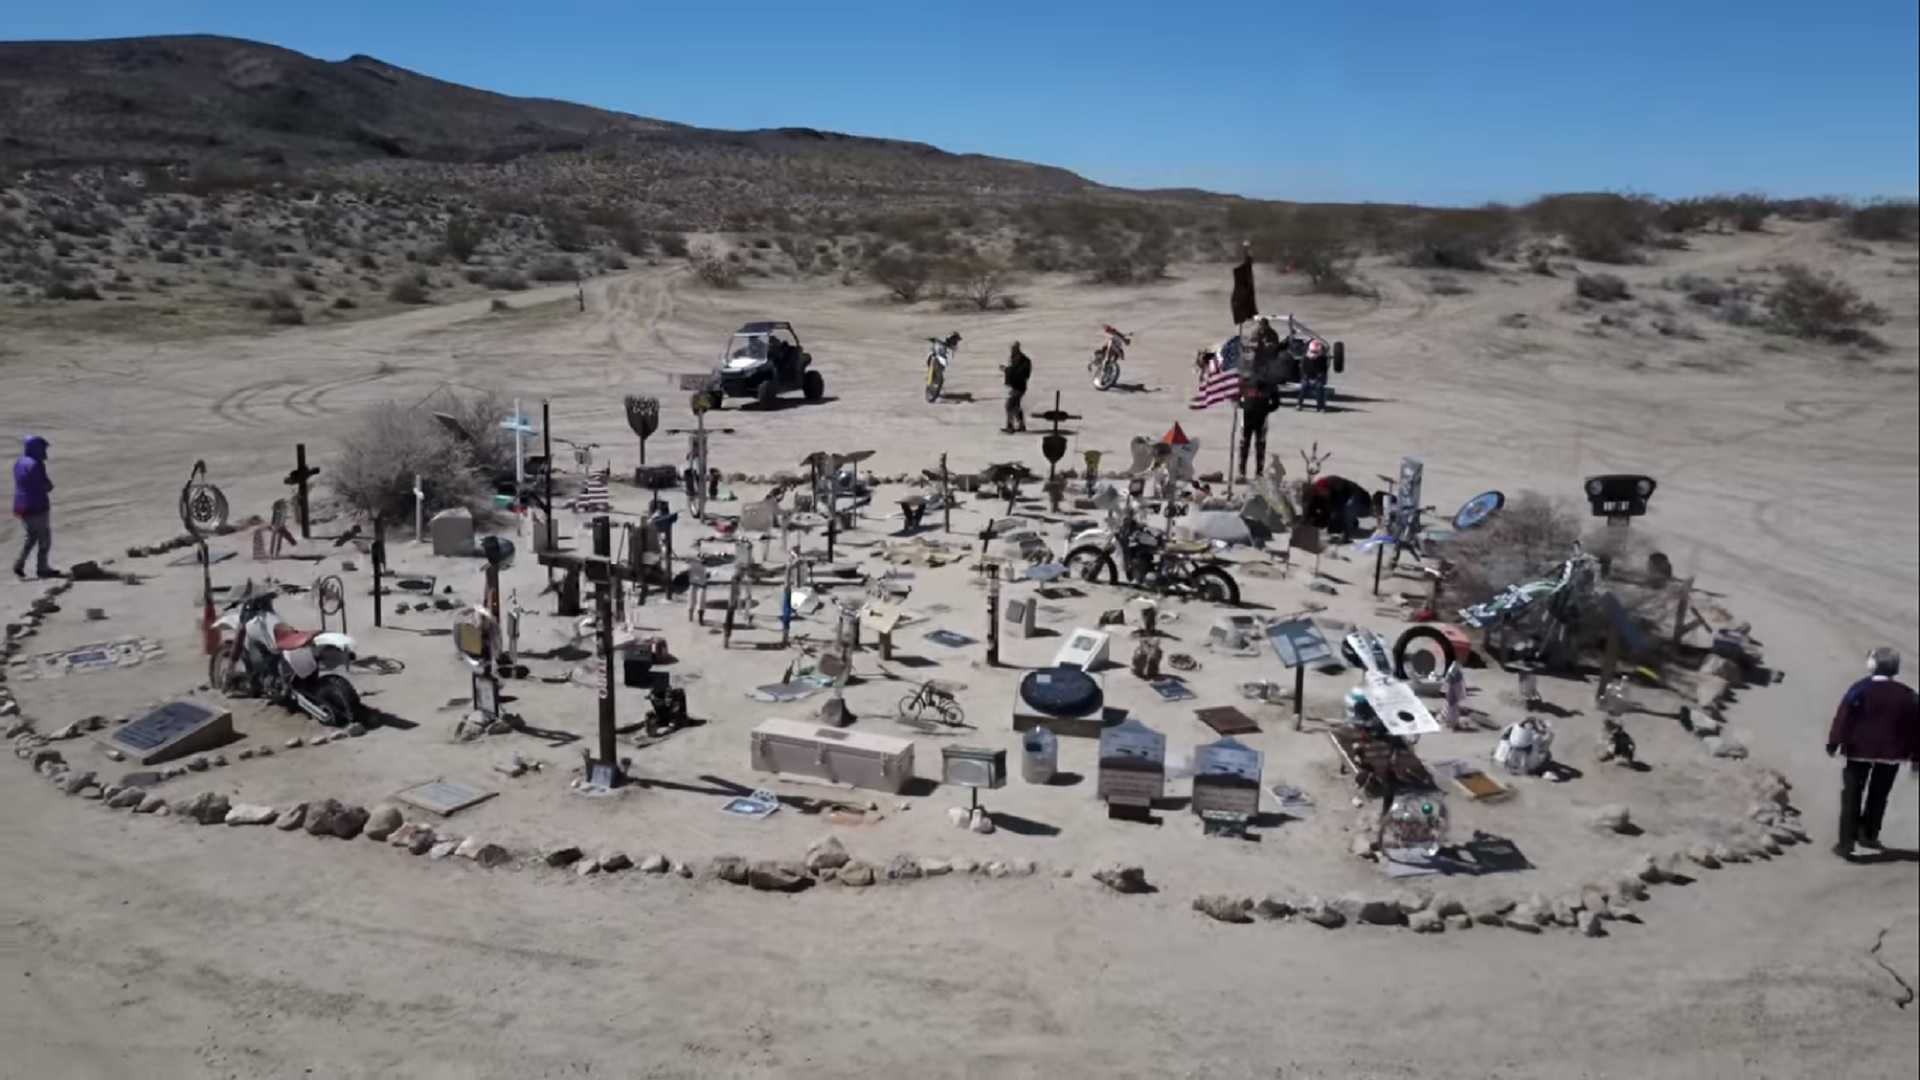 Husky Monument – Το μνημείο των αναβατών στην μέση της ερήμου